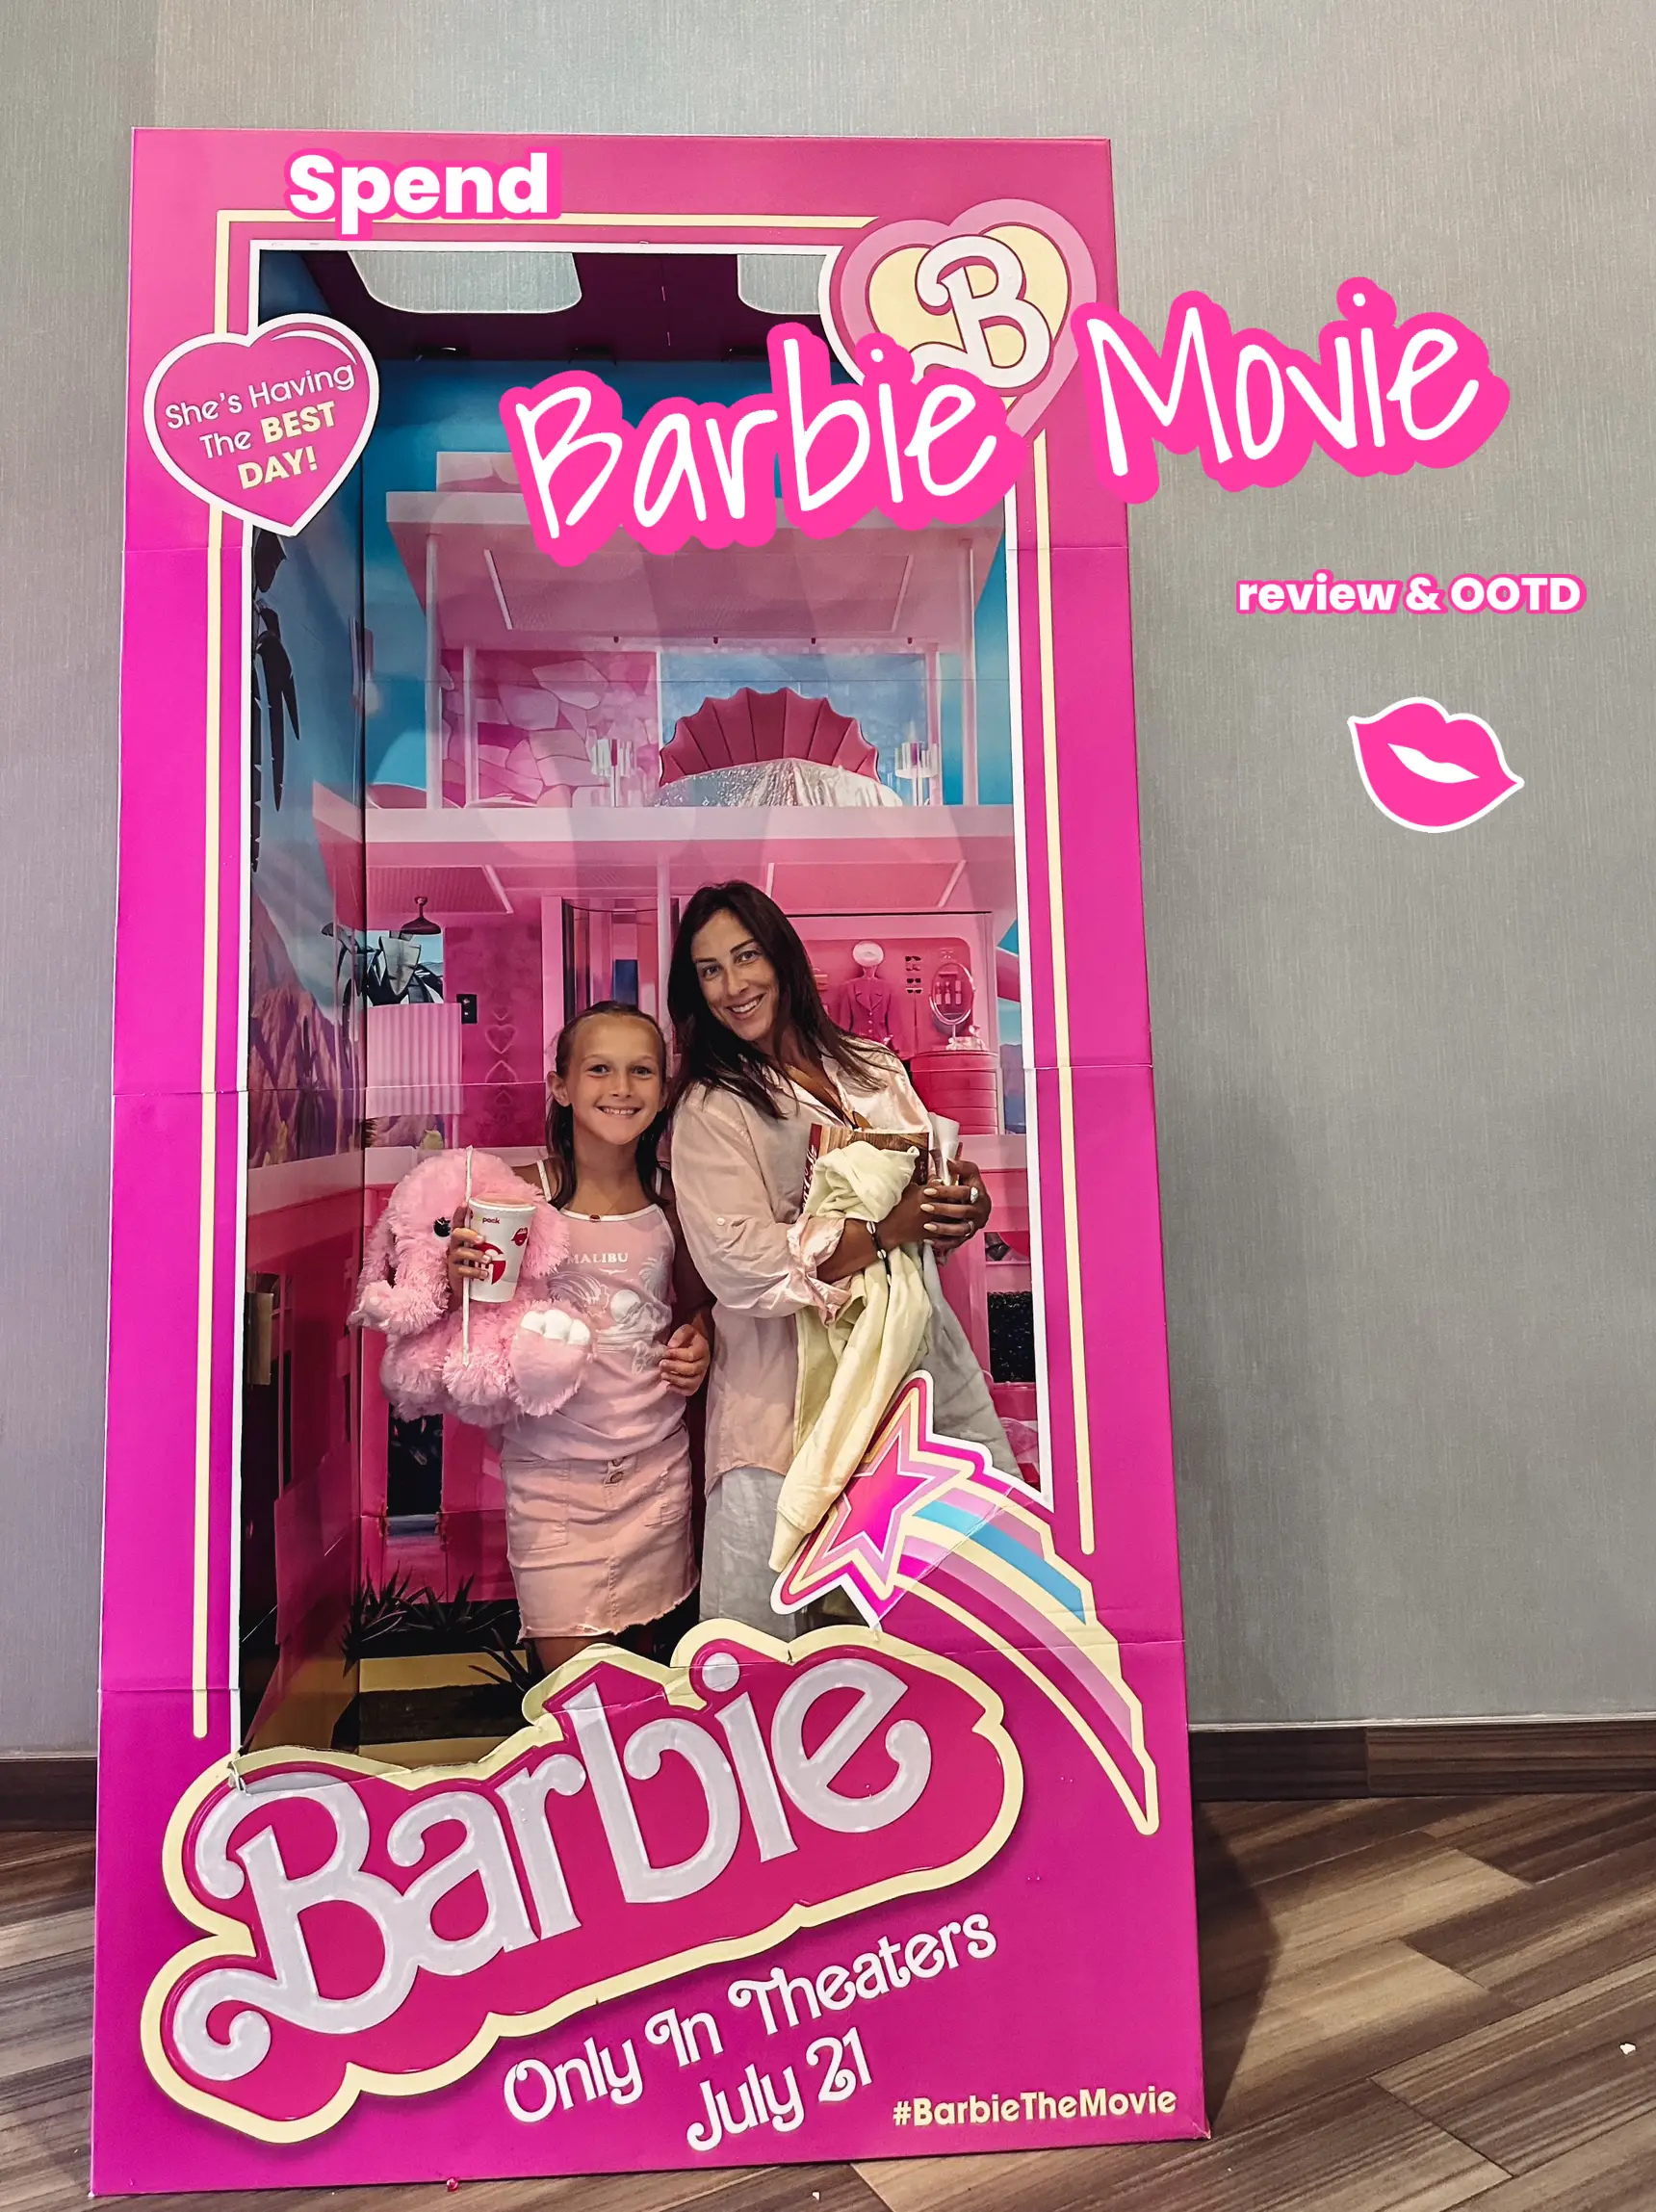 Walking through Barbie's closet - Lemon8 Search